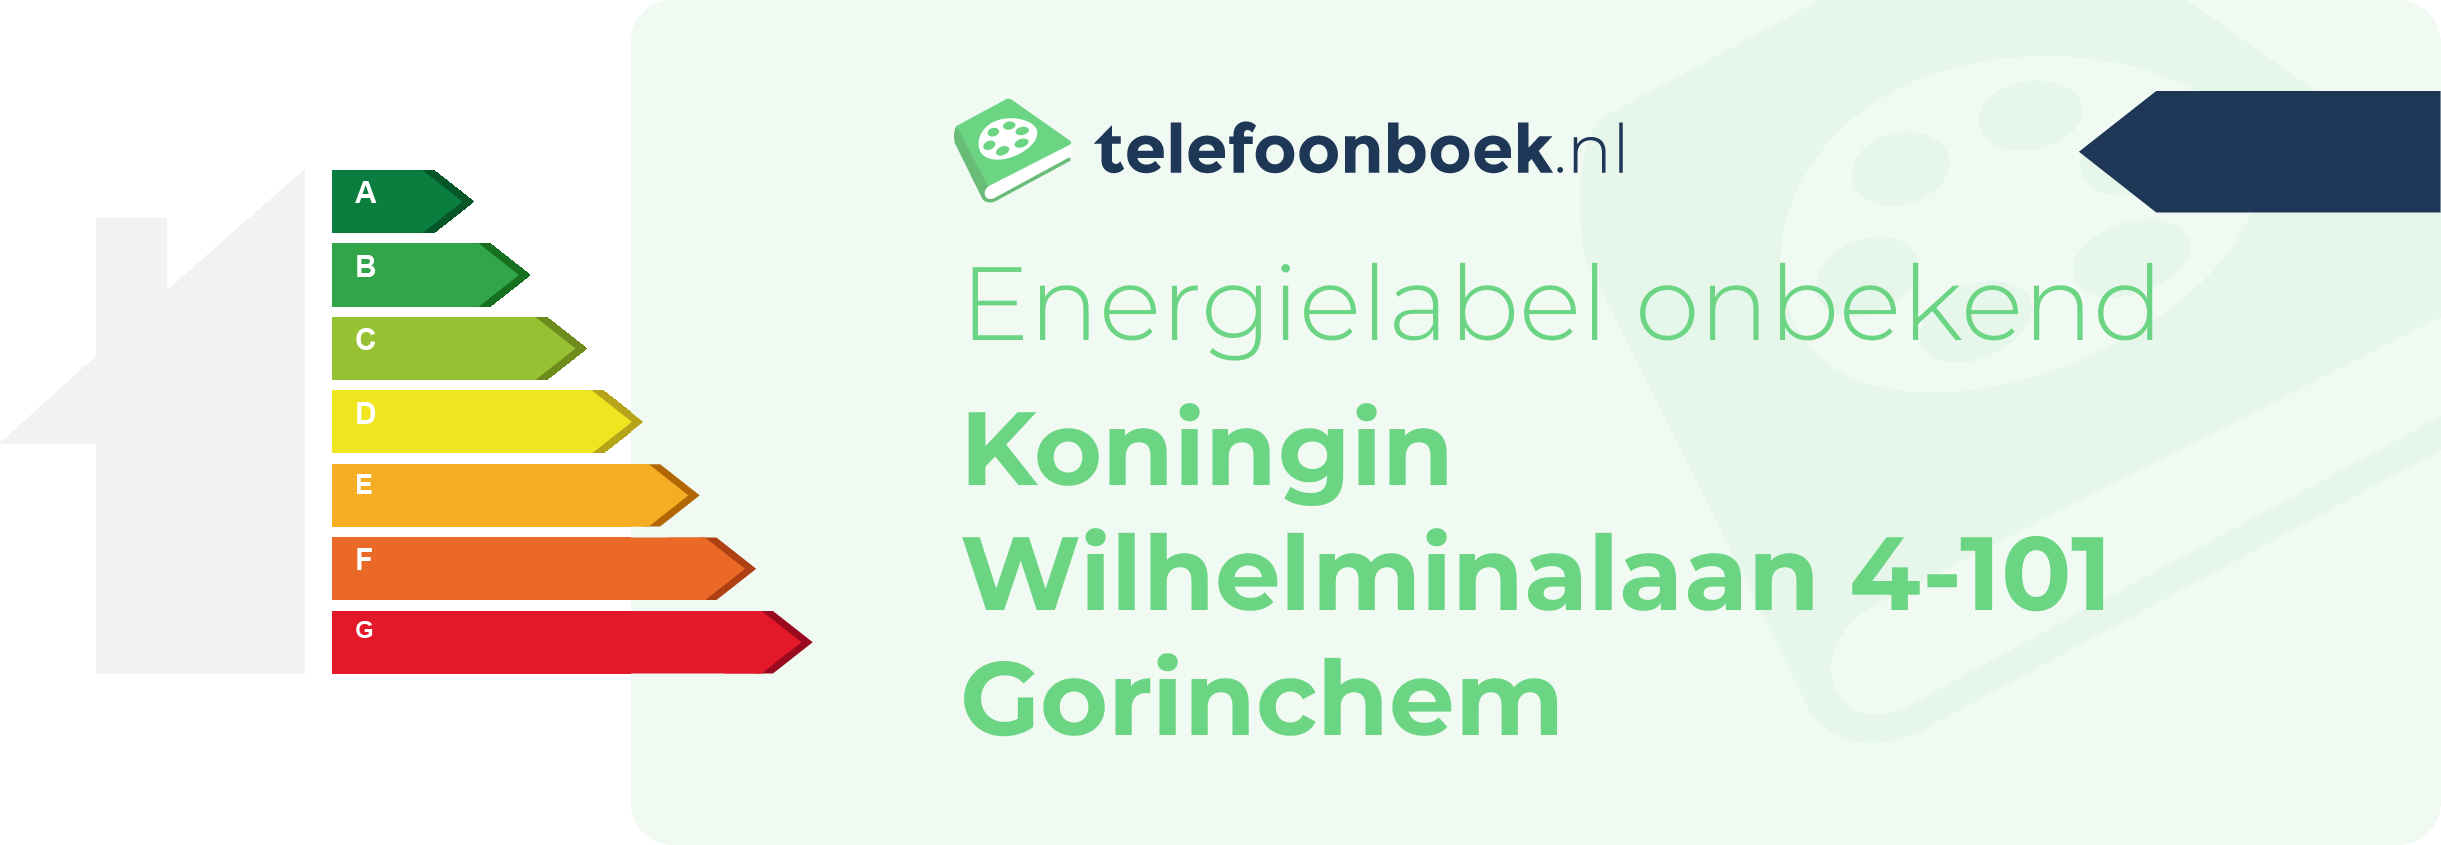 Energielabel Koningin Wilhelminalaan 4-101 Gorinchem